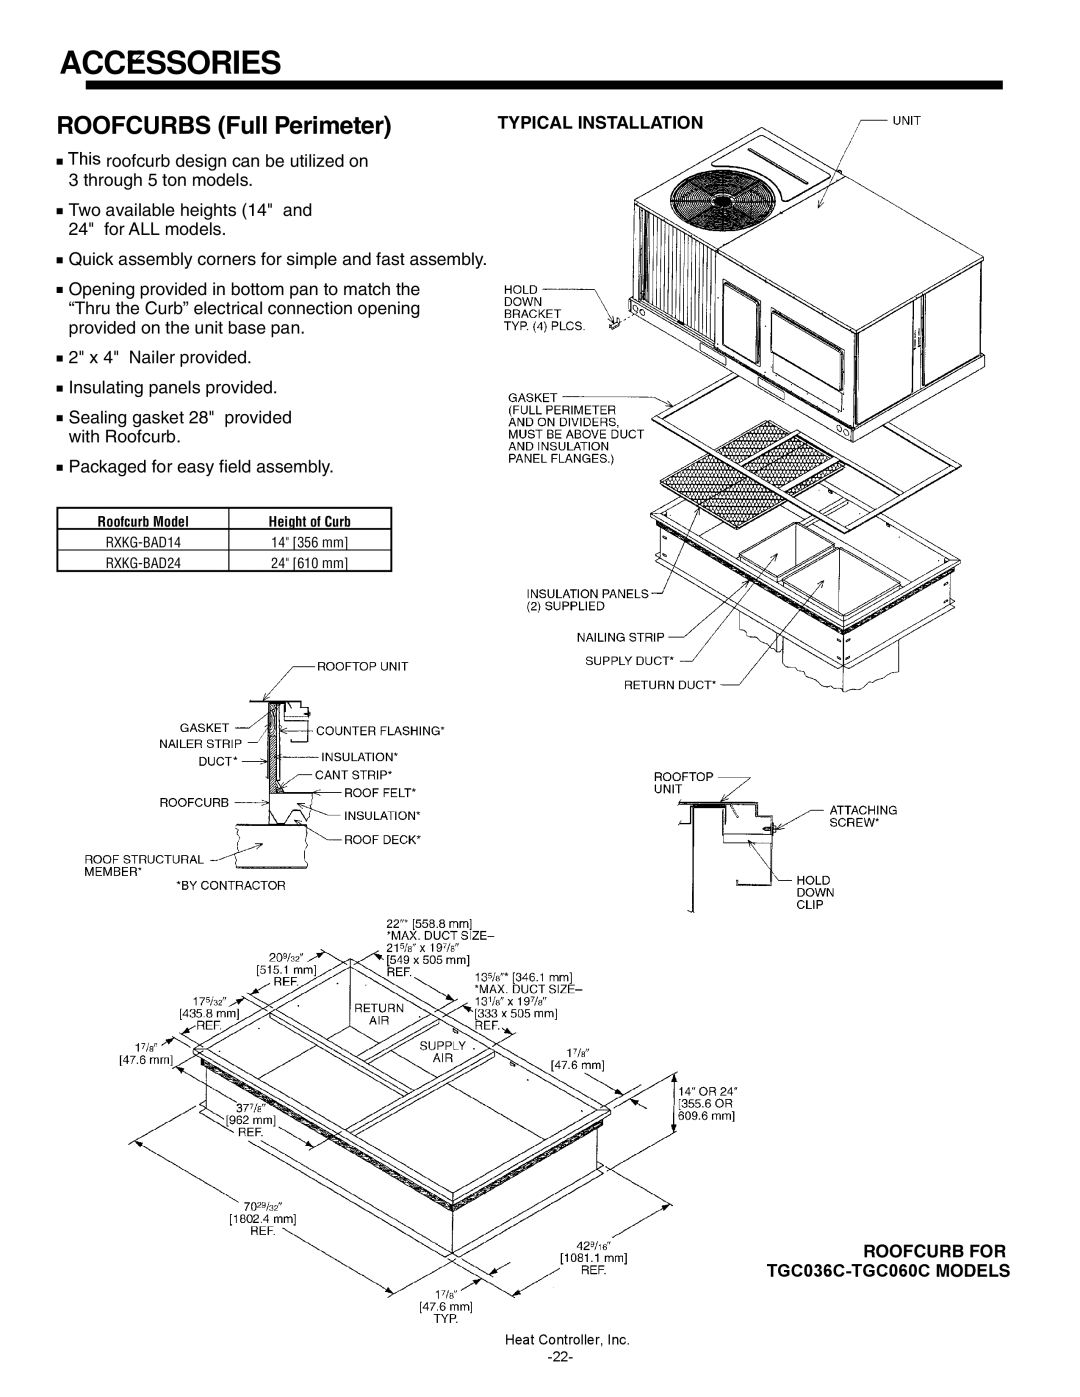 Heat Controller TGC060C-3K-135, TGC060C-4K-135 manual ACCESSORIES22, ROOFCURBS Full Perimeter, Typical Installation 